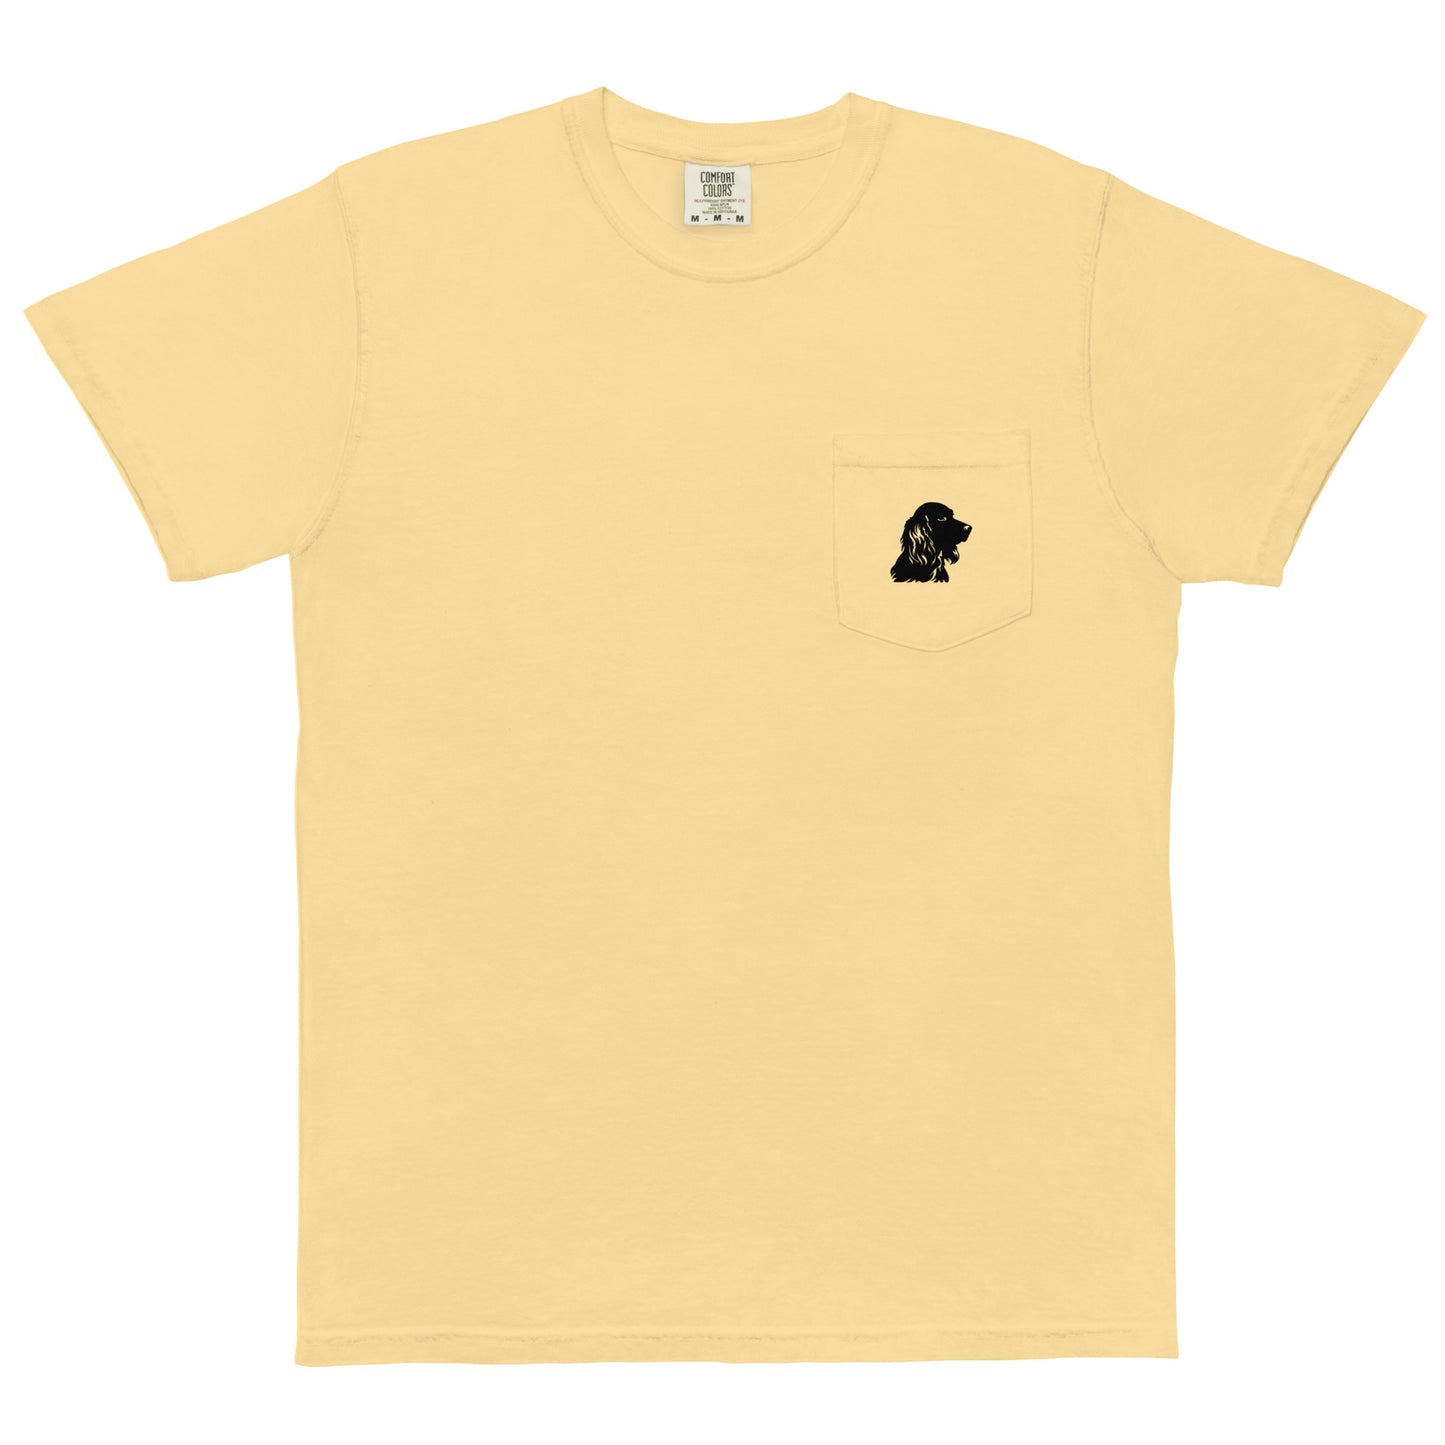 Boykin Spaniel Pocket T-Shirt